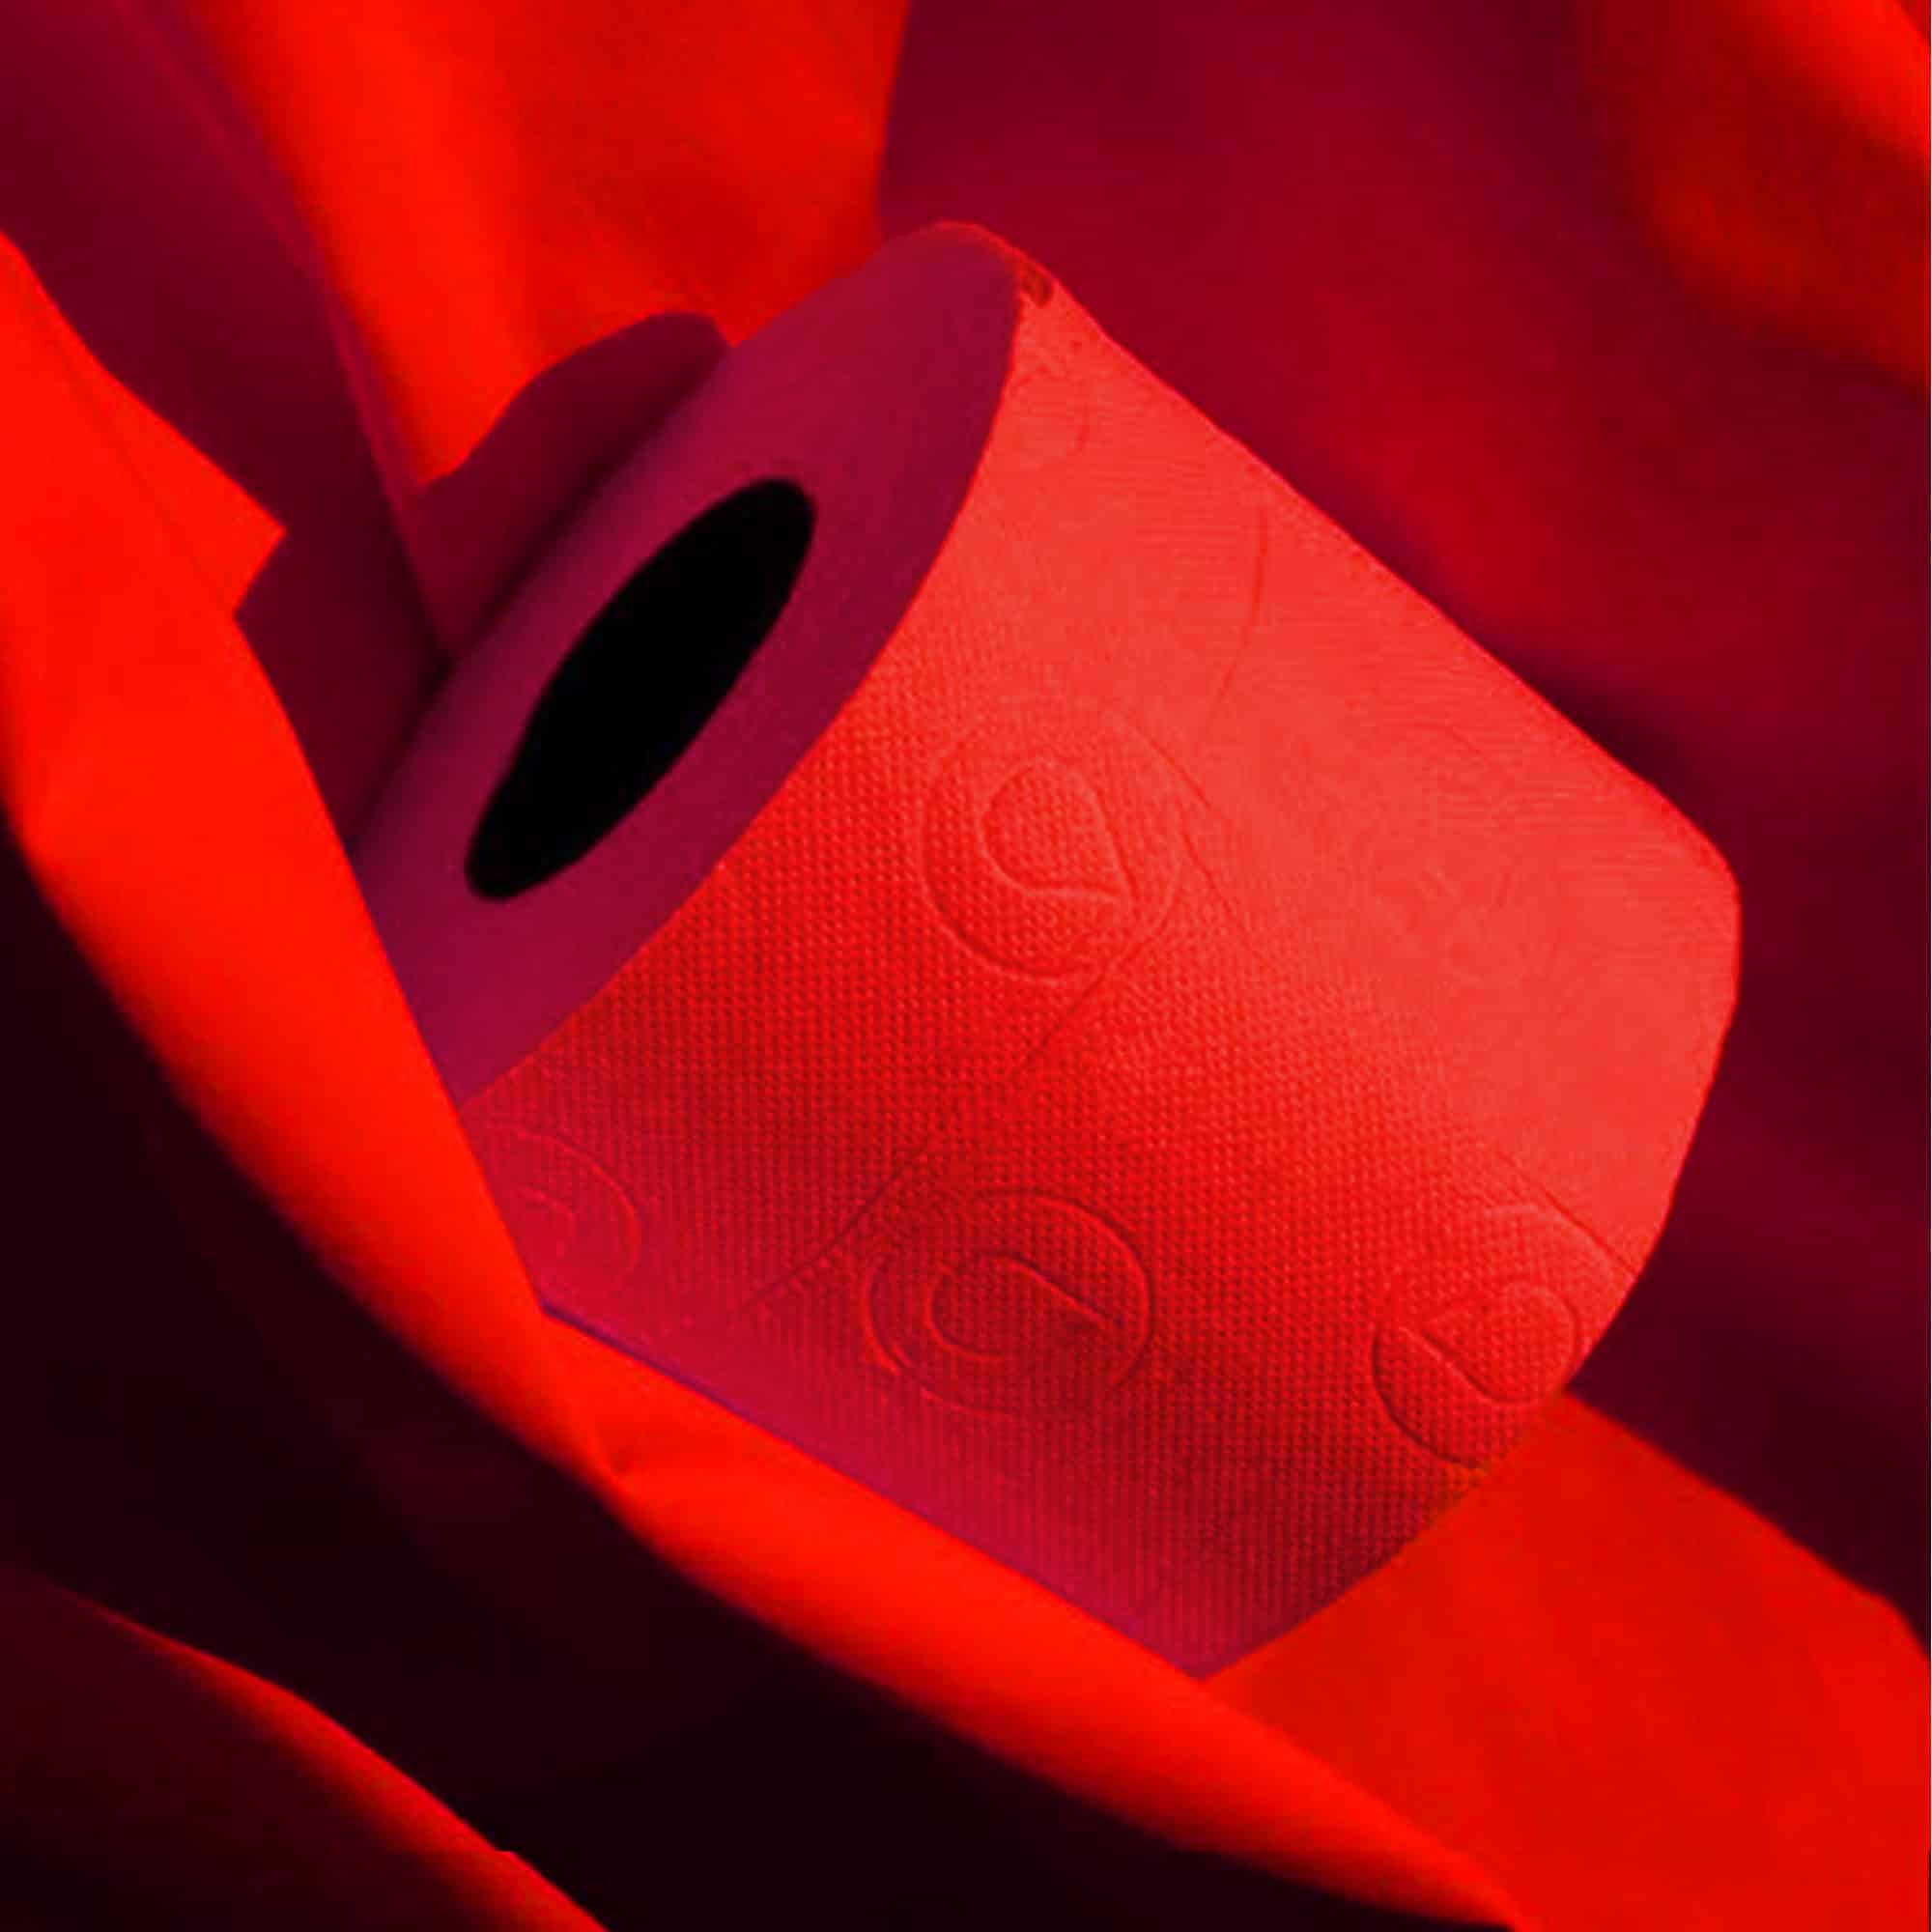 Renova Red Toilet Paper Blister Pack, 2 Rolls, 140 Sheets Per Roll 